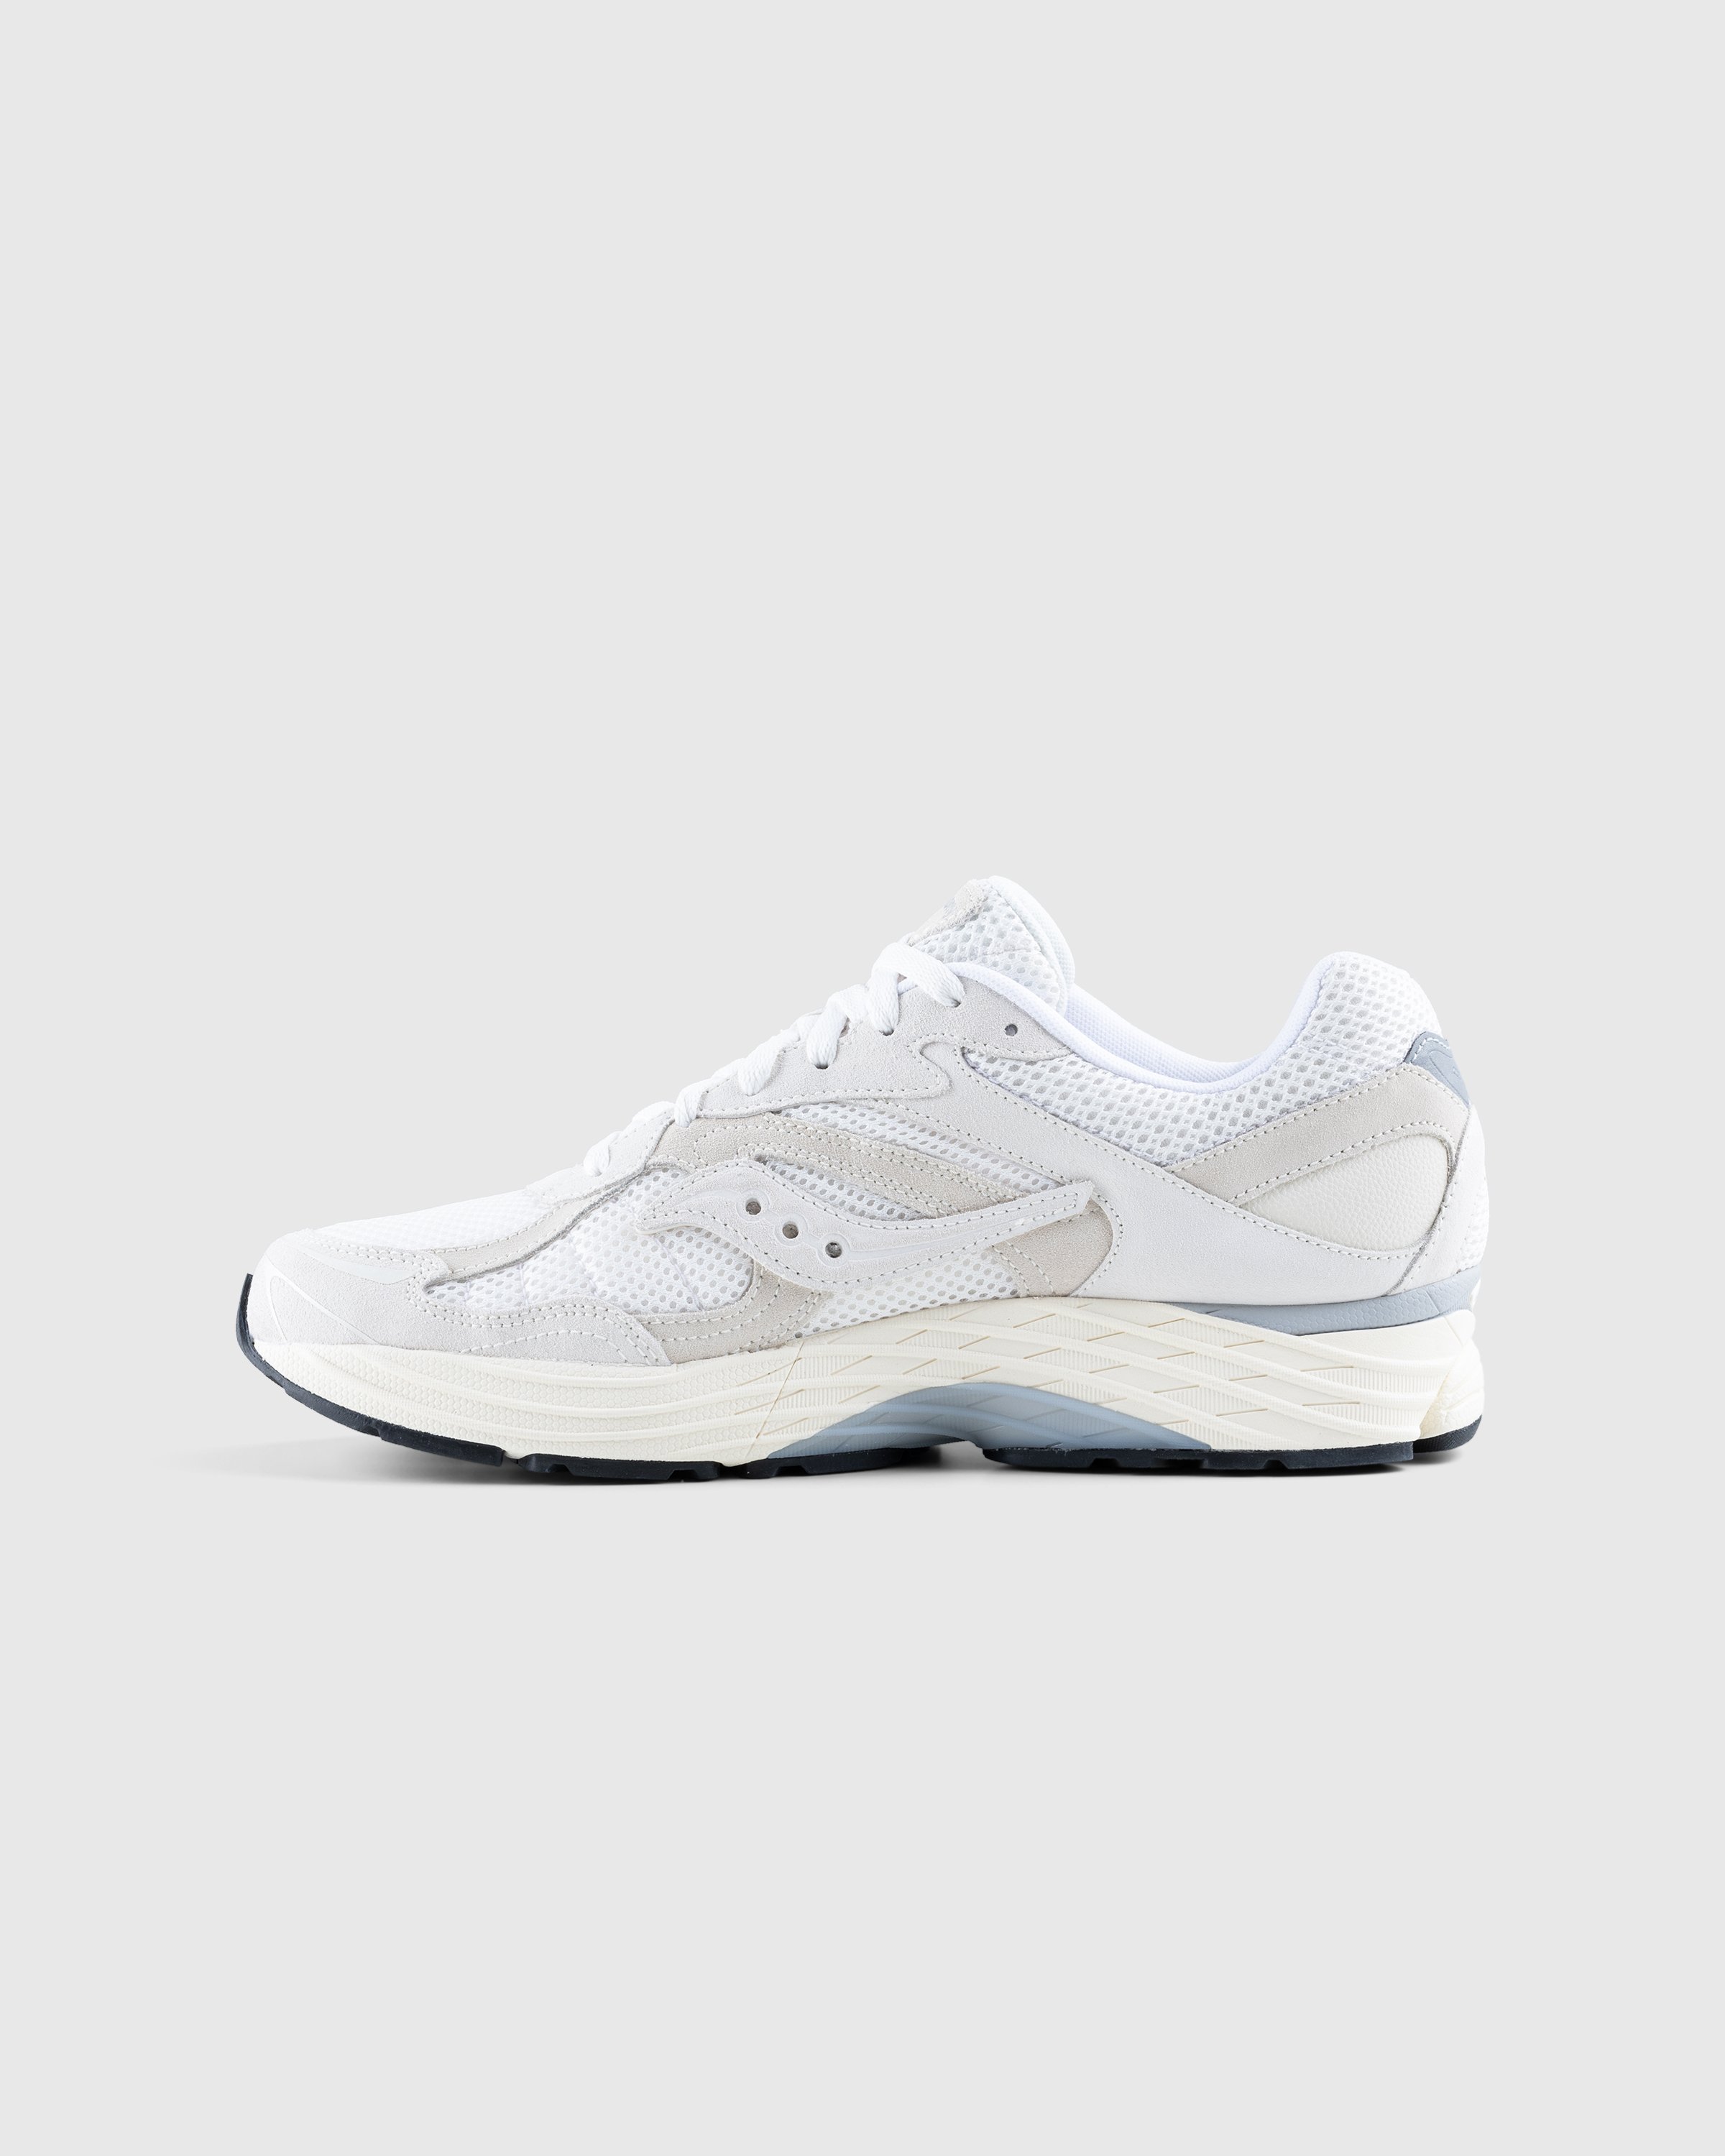 Saucony - ProGrid Omni 9 White/Off-White - Footwear - WHITE - Image 2